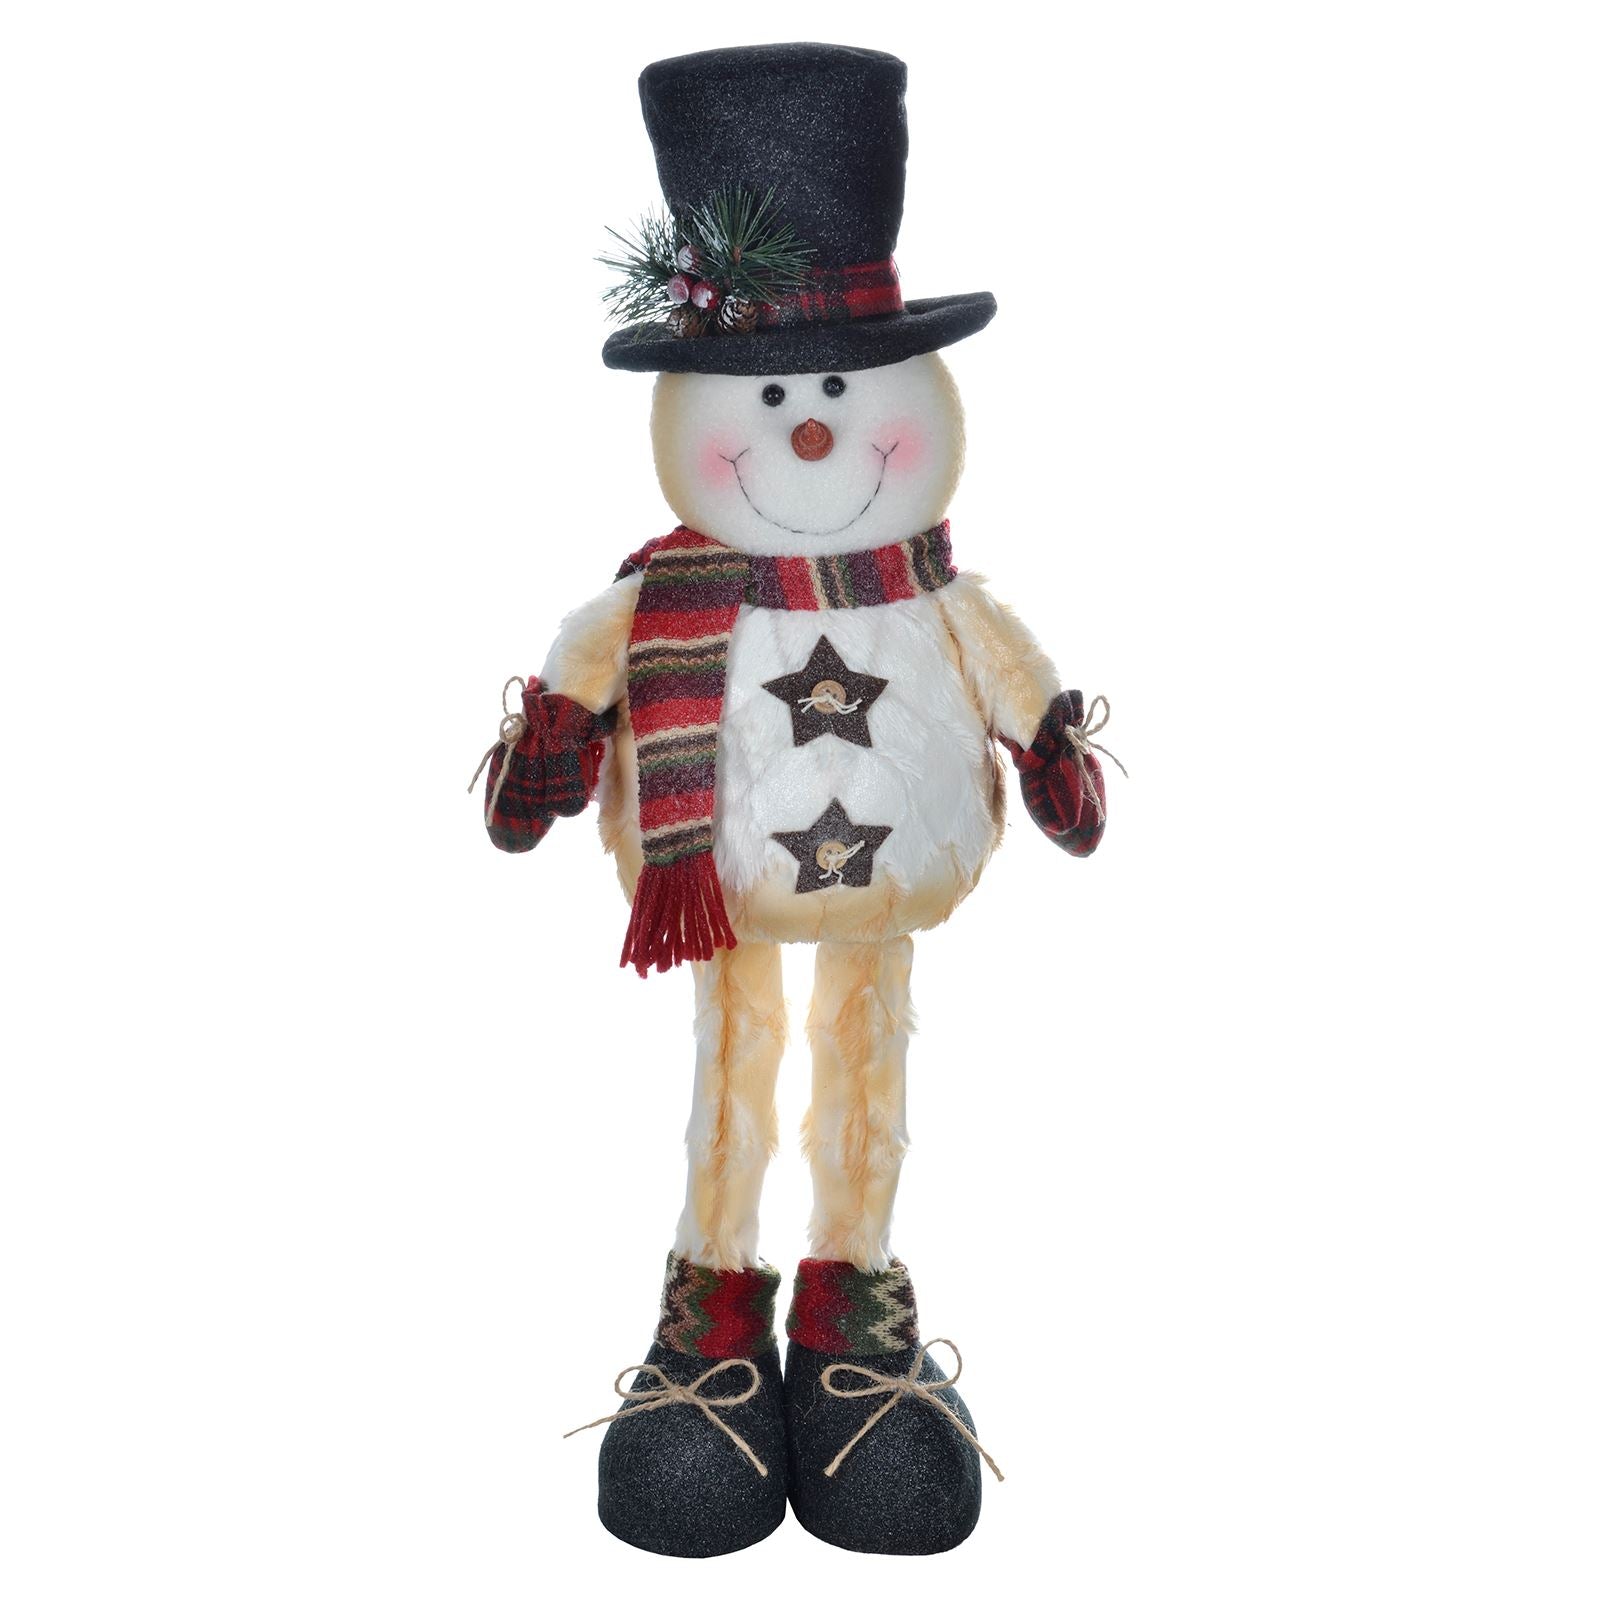 Mr Crimbo Plush Snowman Decoration Traditional Top Hat - MrCrimbo.co.uk -XS5144 - 58cm -christmas decorations